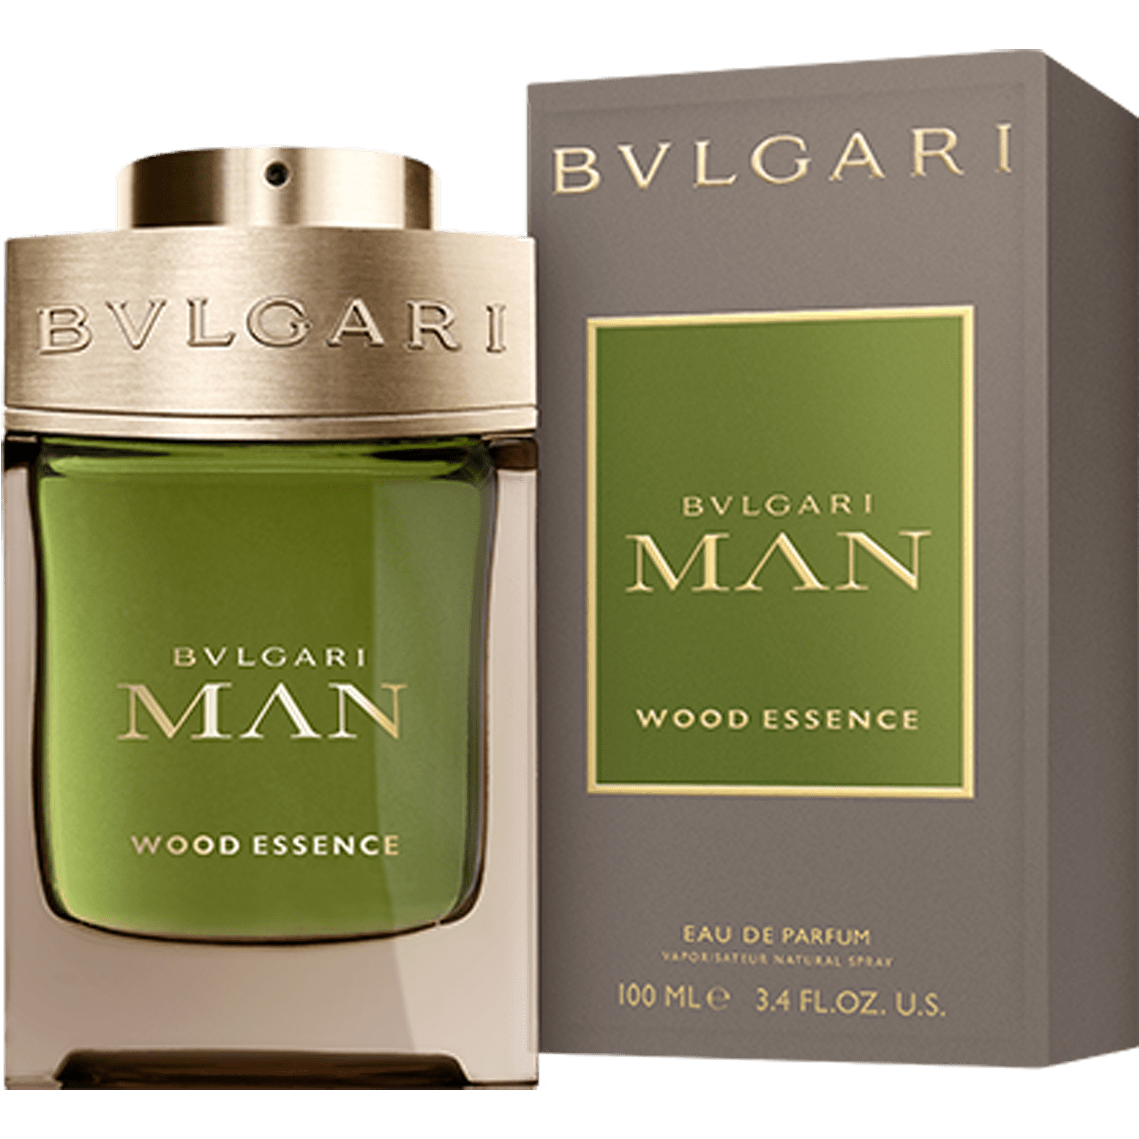 bvlgari-man-wood-essence-100ml